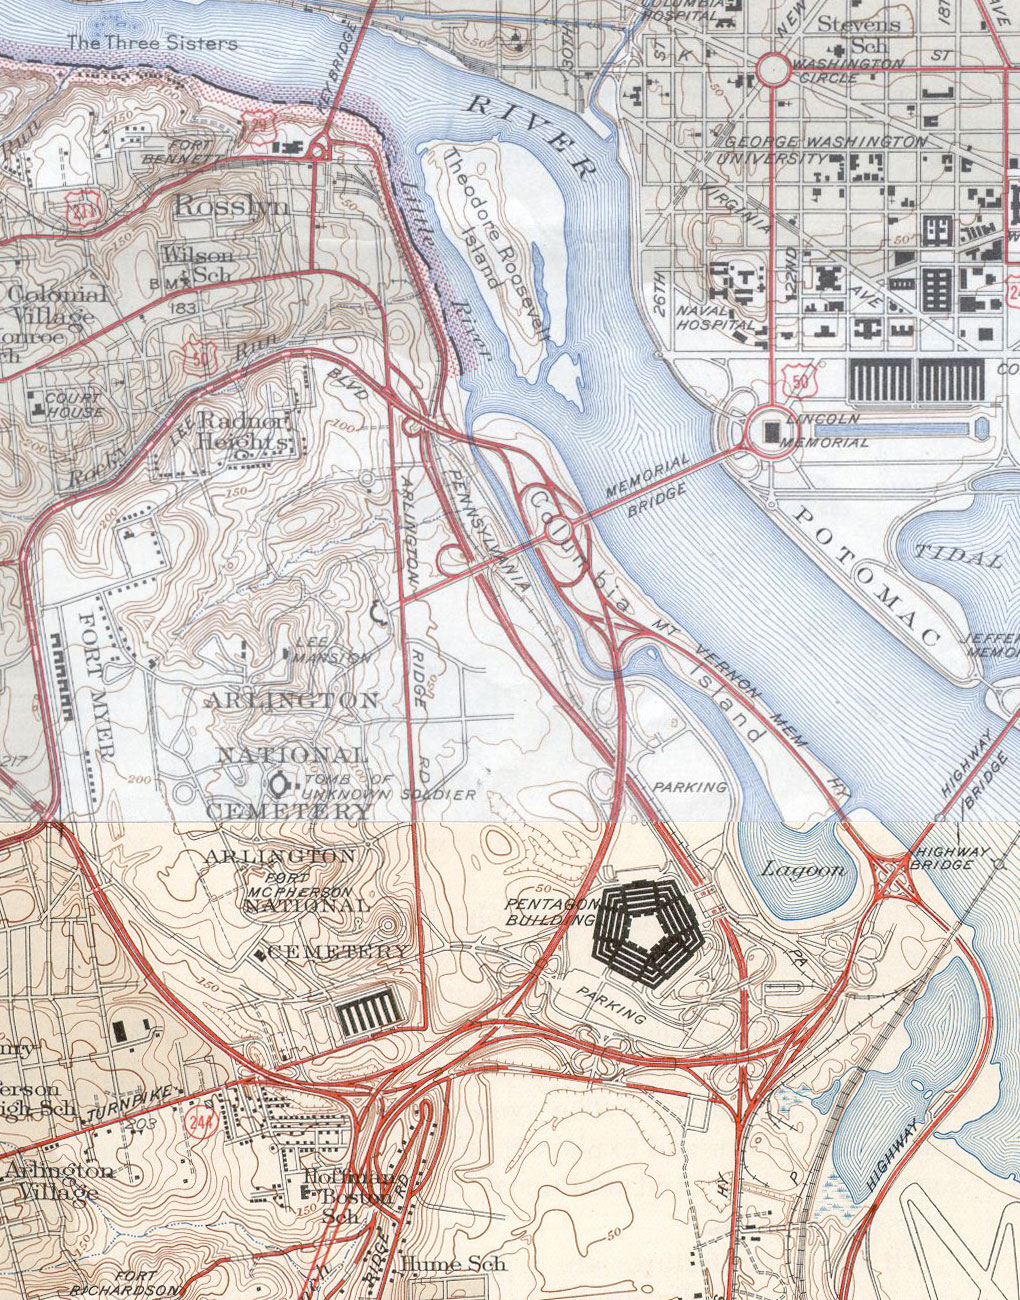 Pentagon_road_network_map_1945